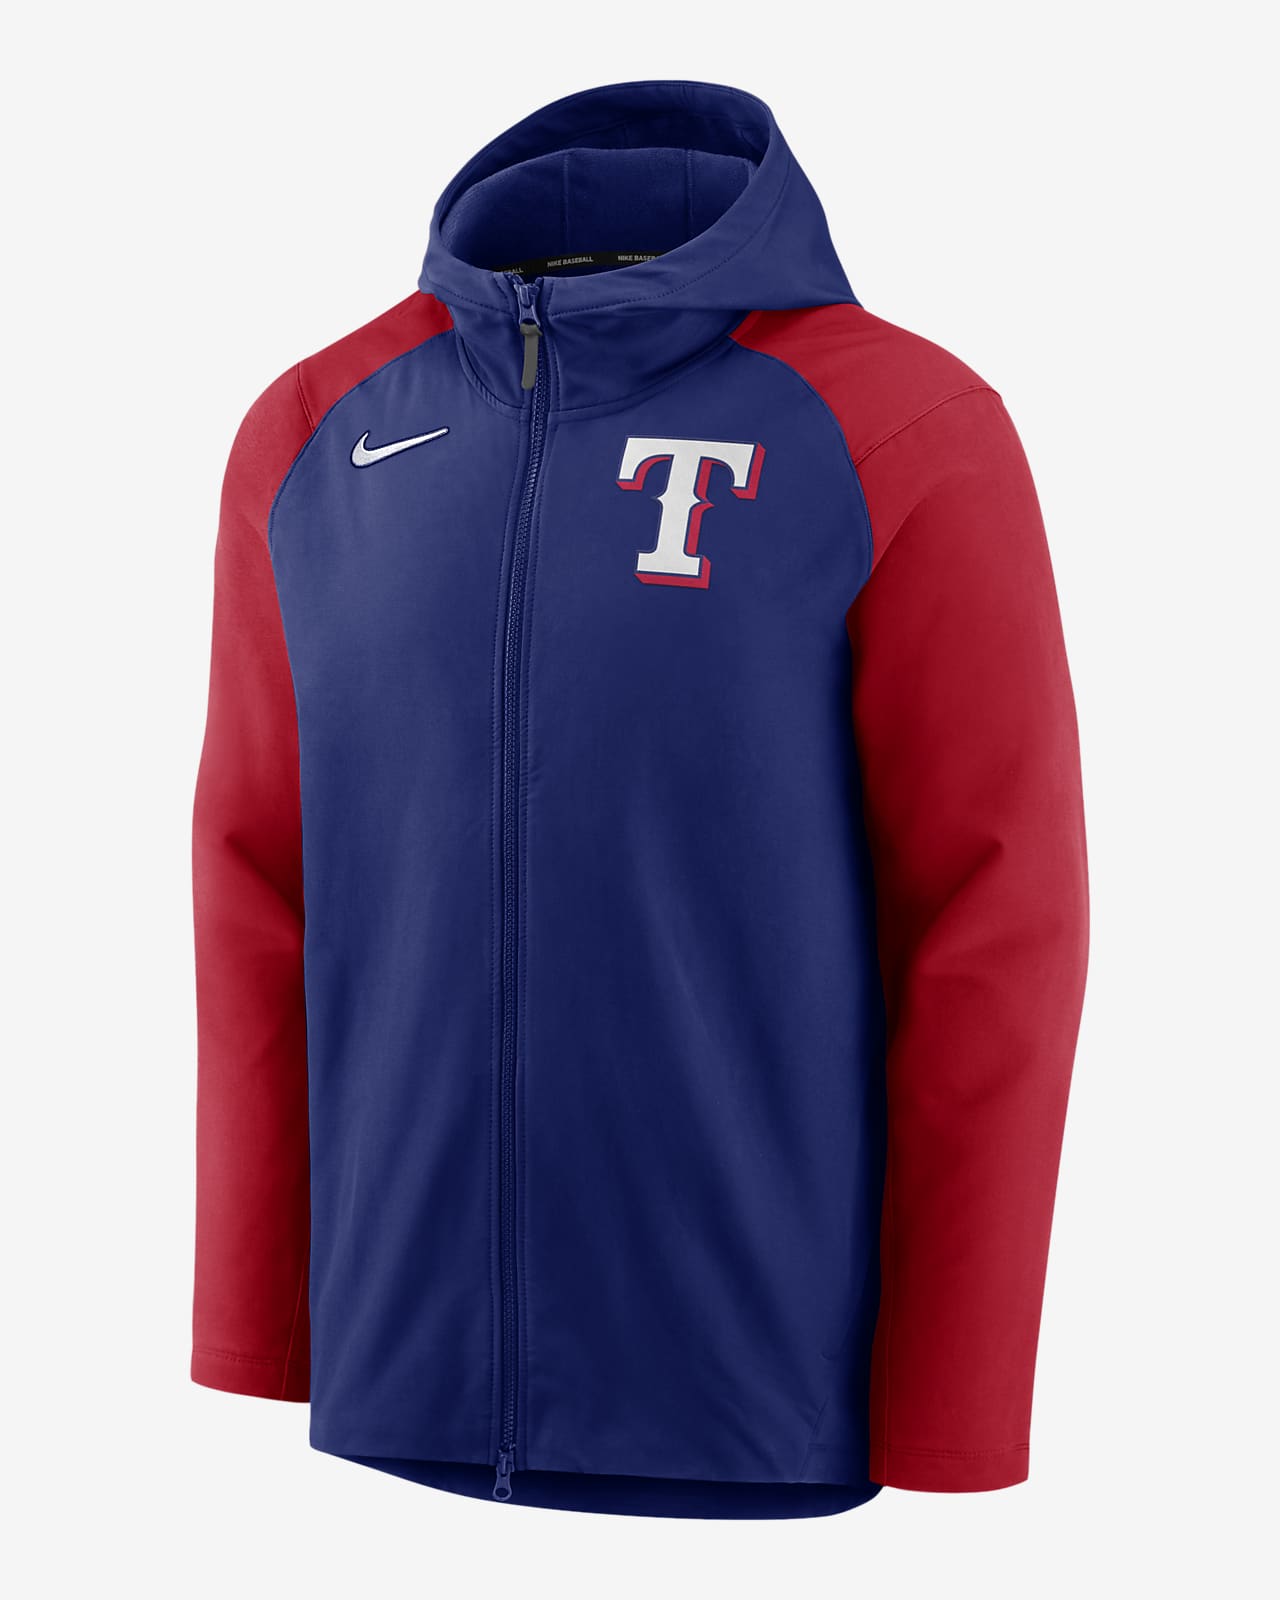 Nike Therma Player (MLB Texas Rangers) Men's Full-Zip Jacket.